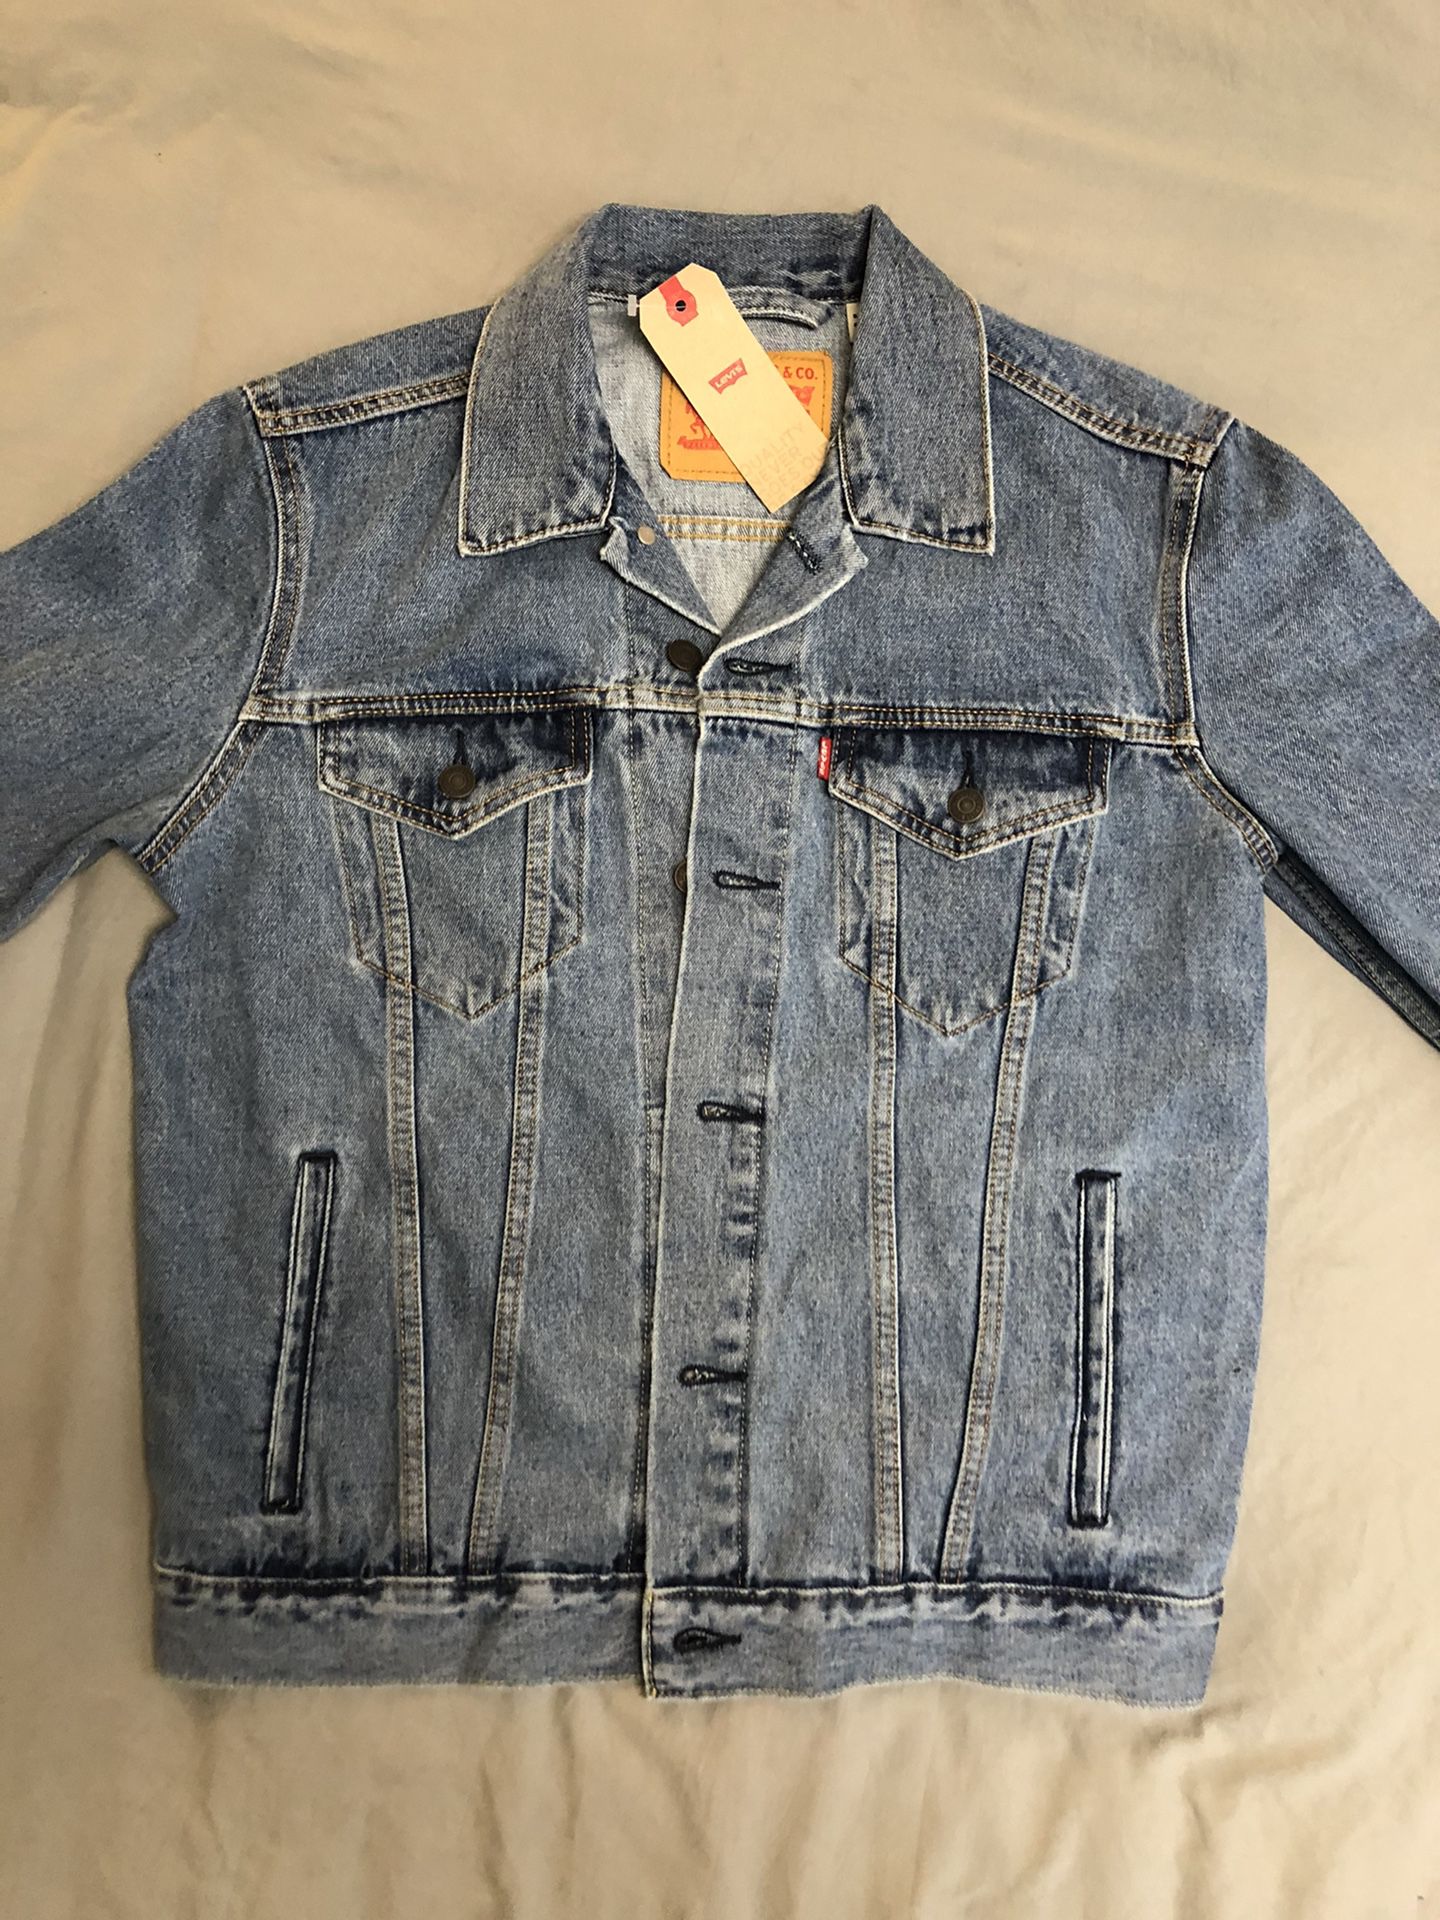 Jean jacket Levi’s brand new never worn